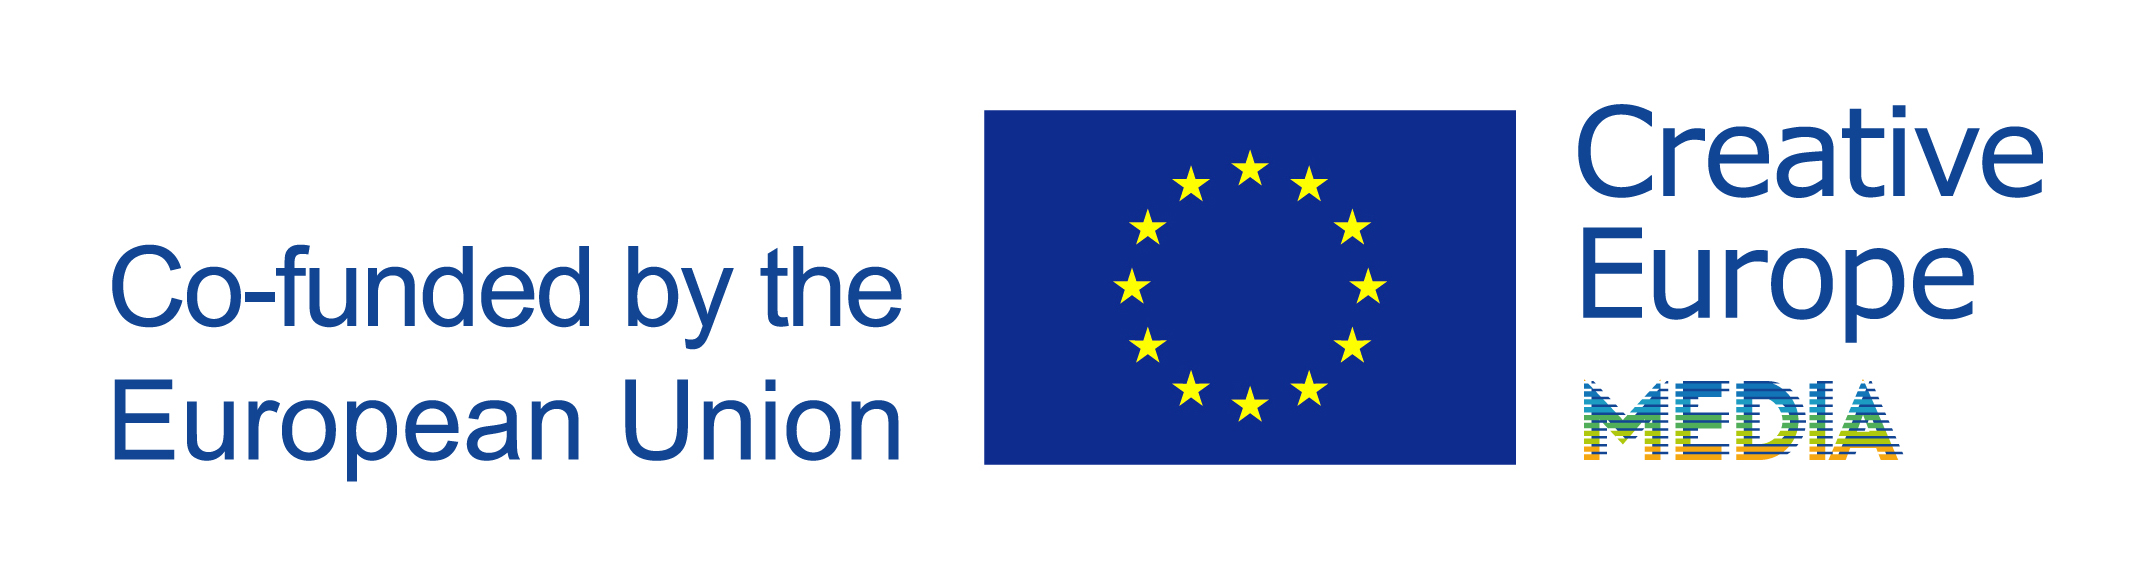 EU Flagge - Creative Europe Media